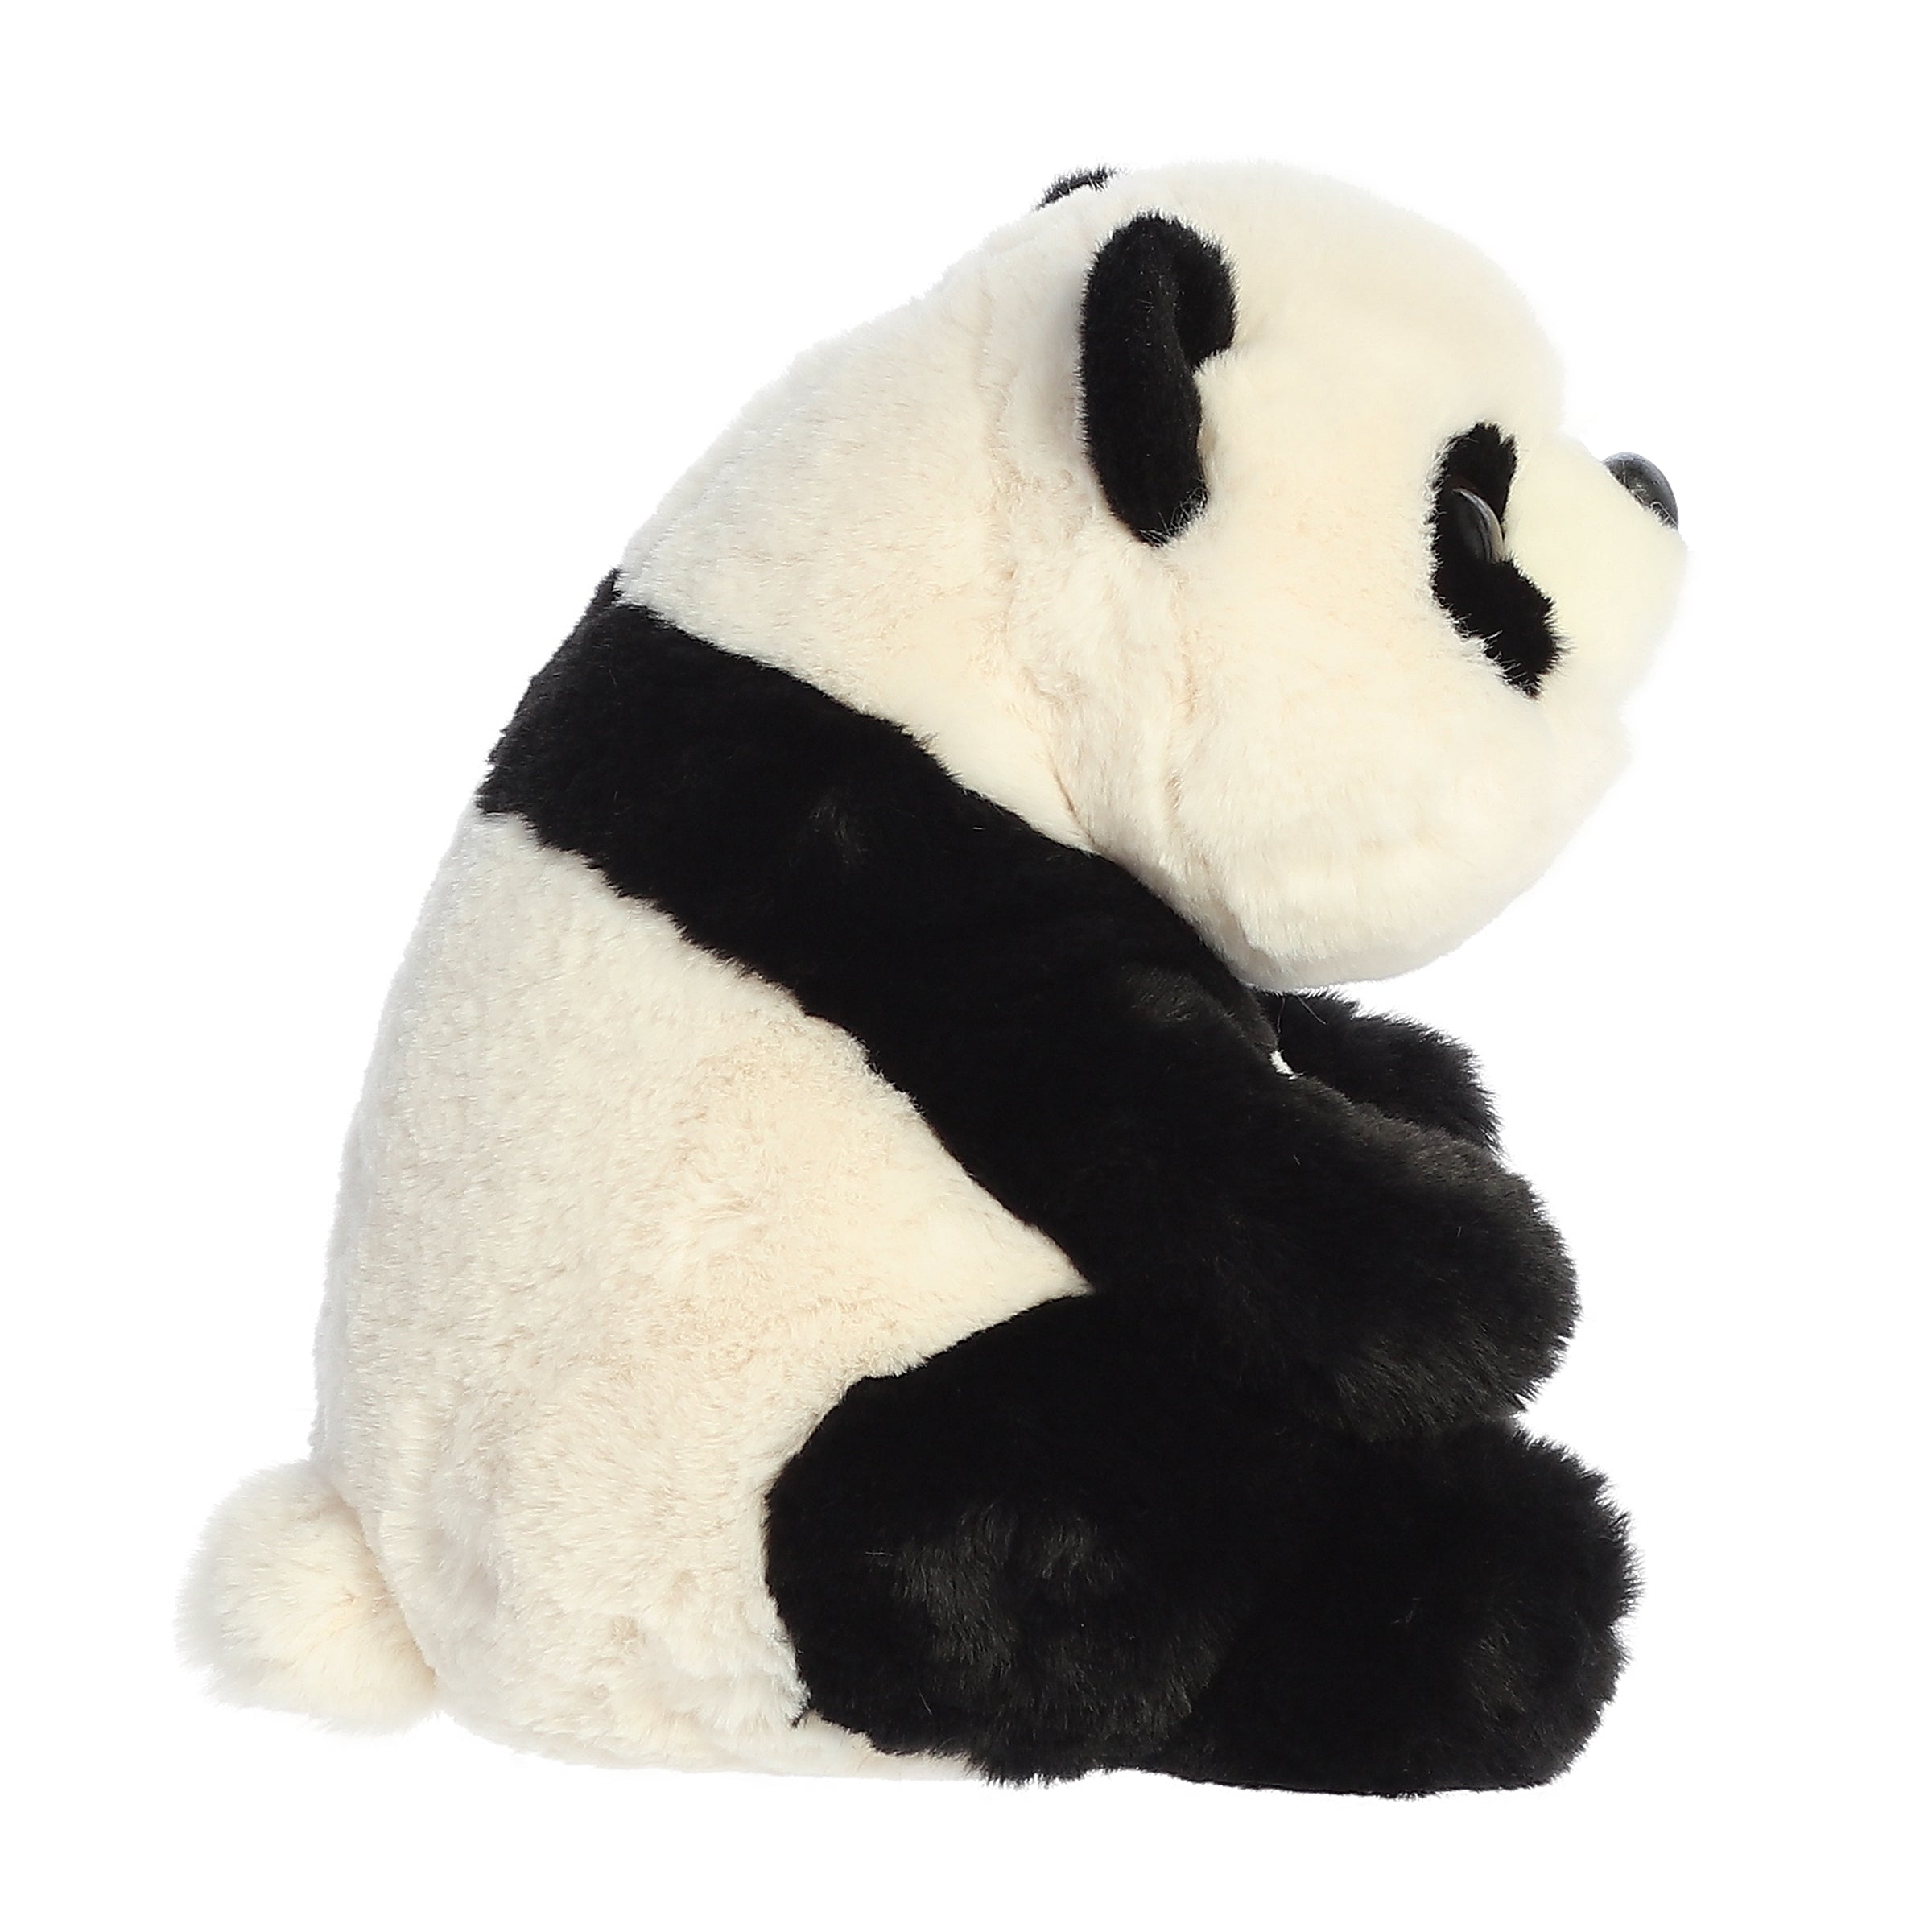 C Aurora® - Lin Lin™ - 11.5" Panda